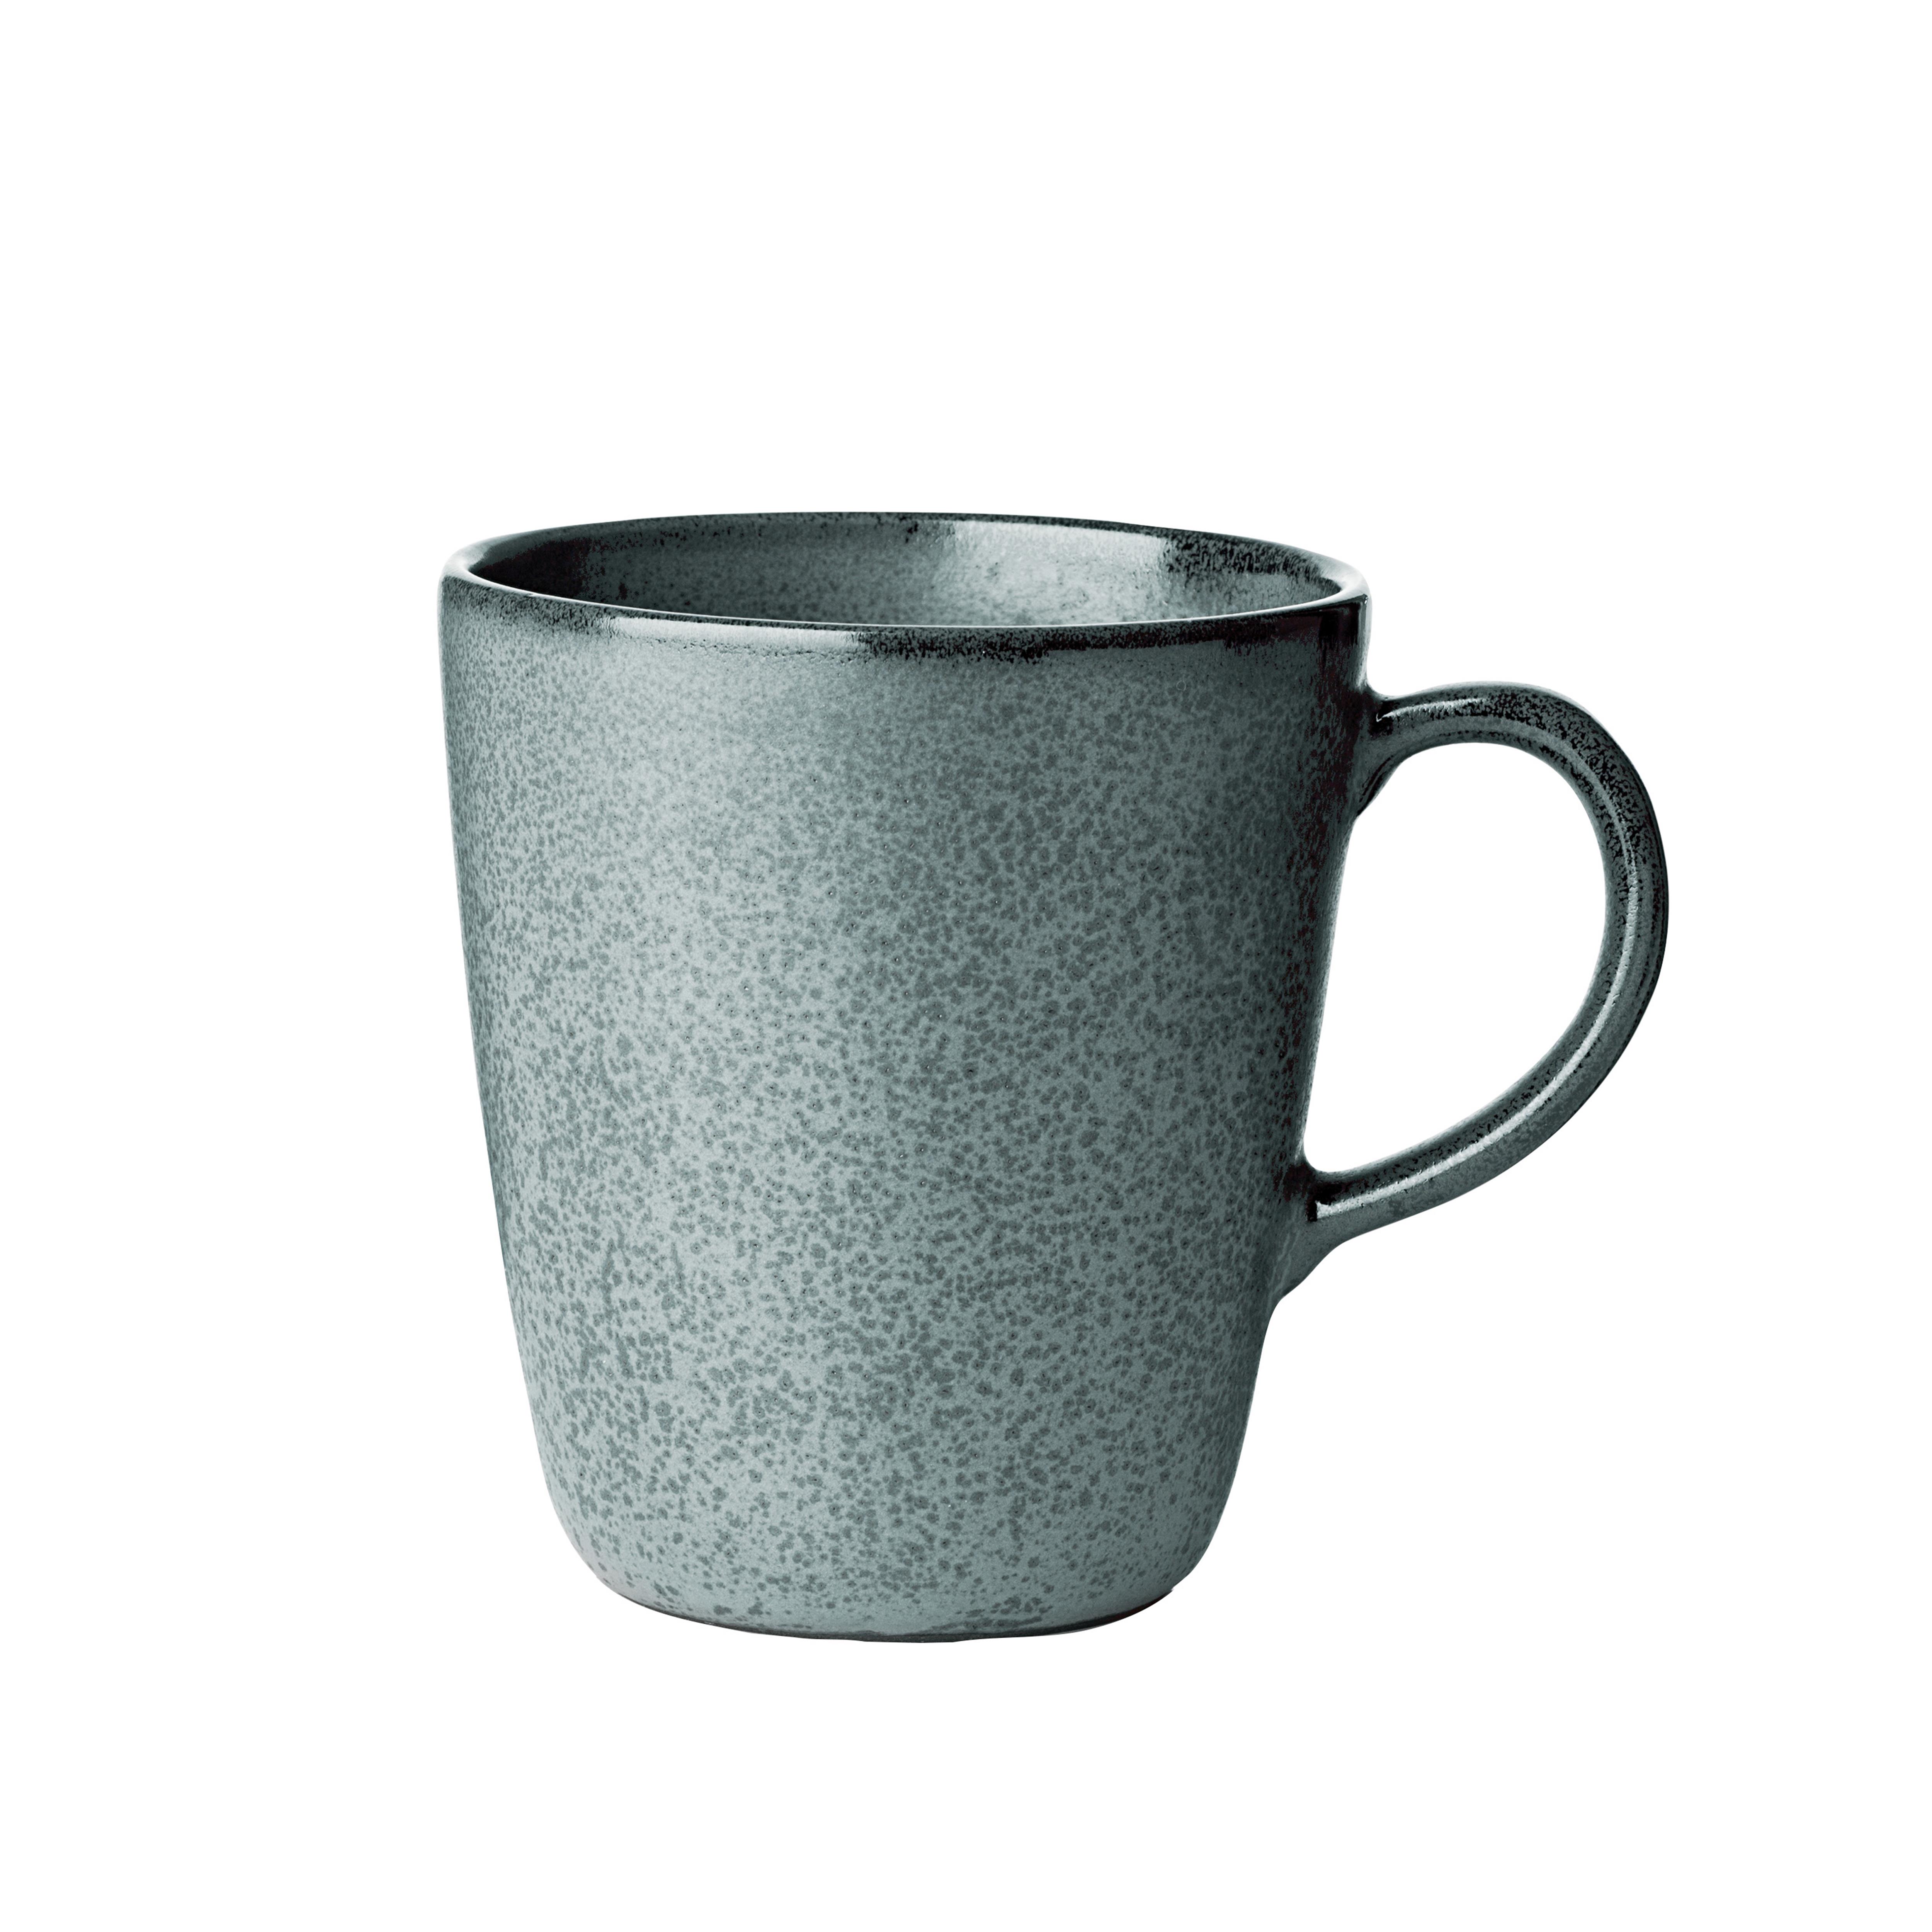 Aida mug 35 Raw handle with cl from